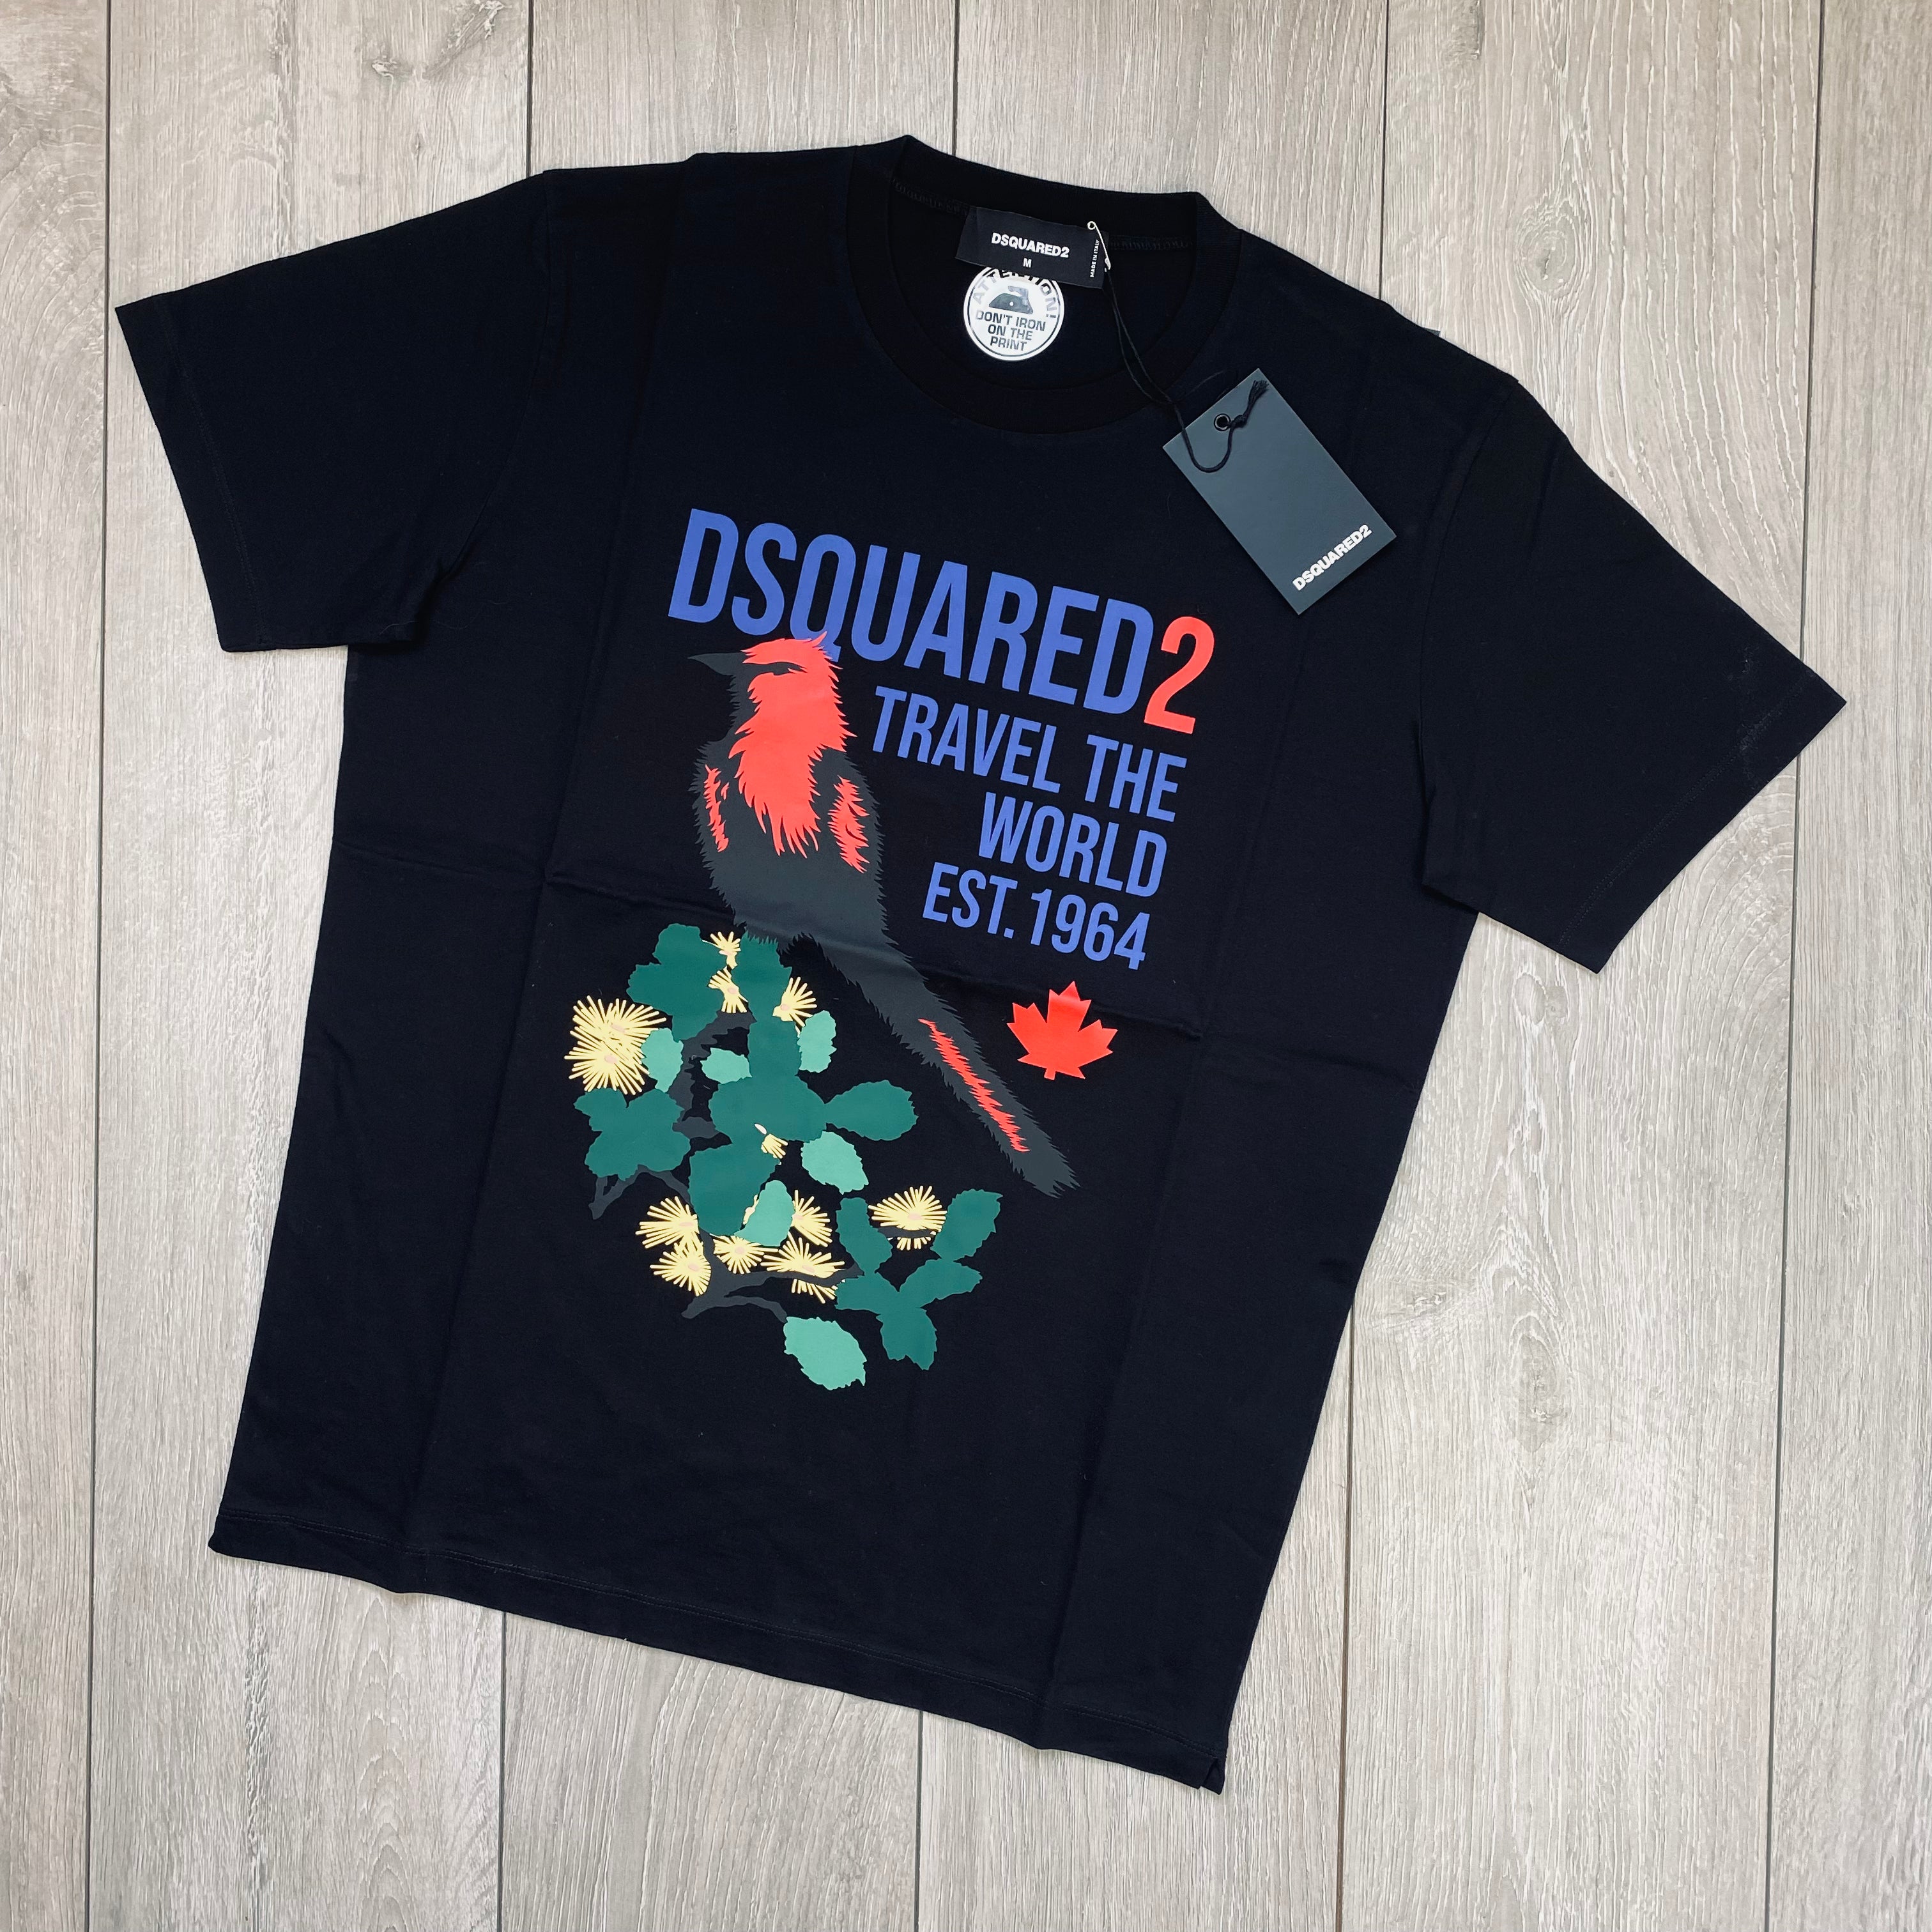 DSQUARED2 Travel T-Shirt